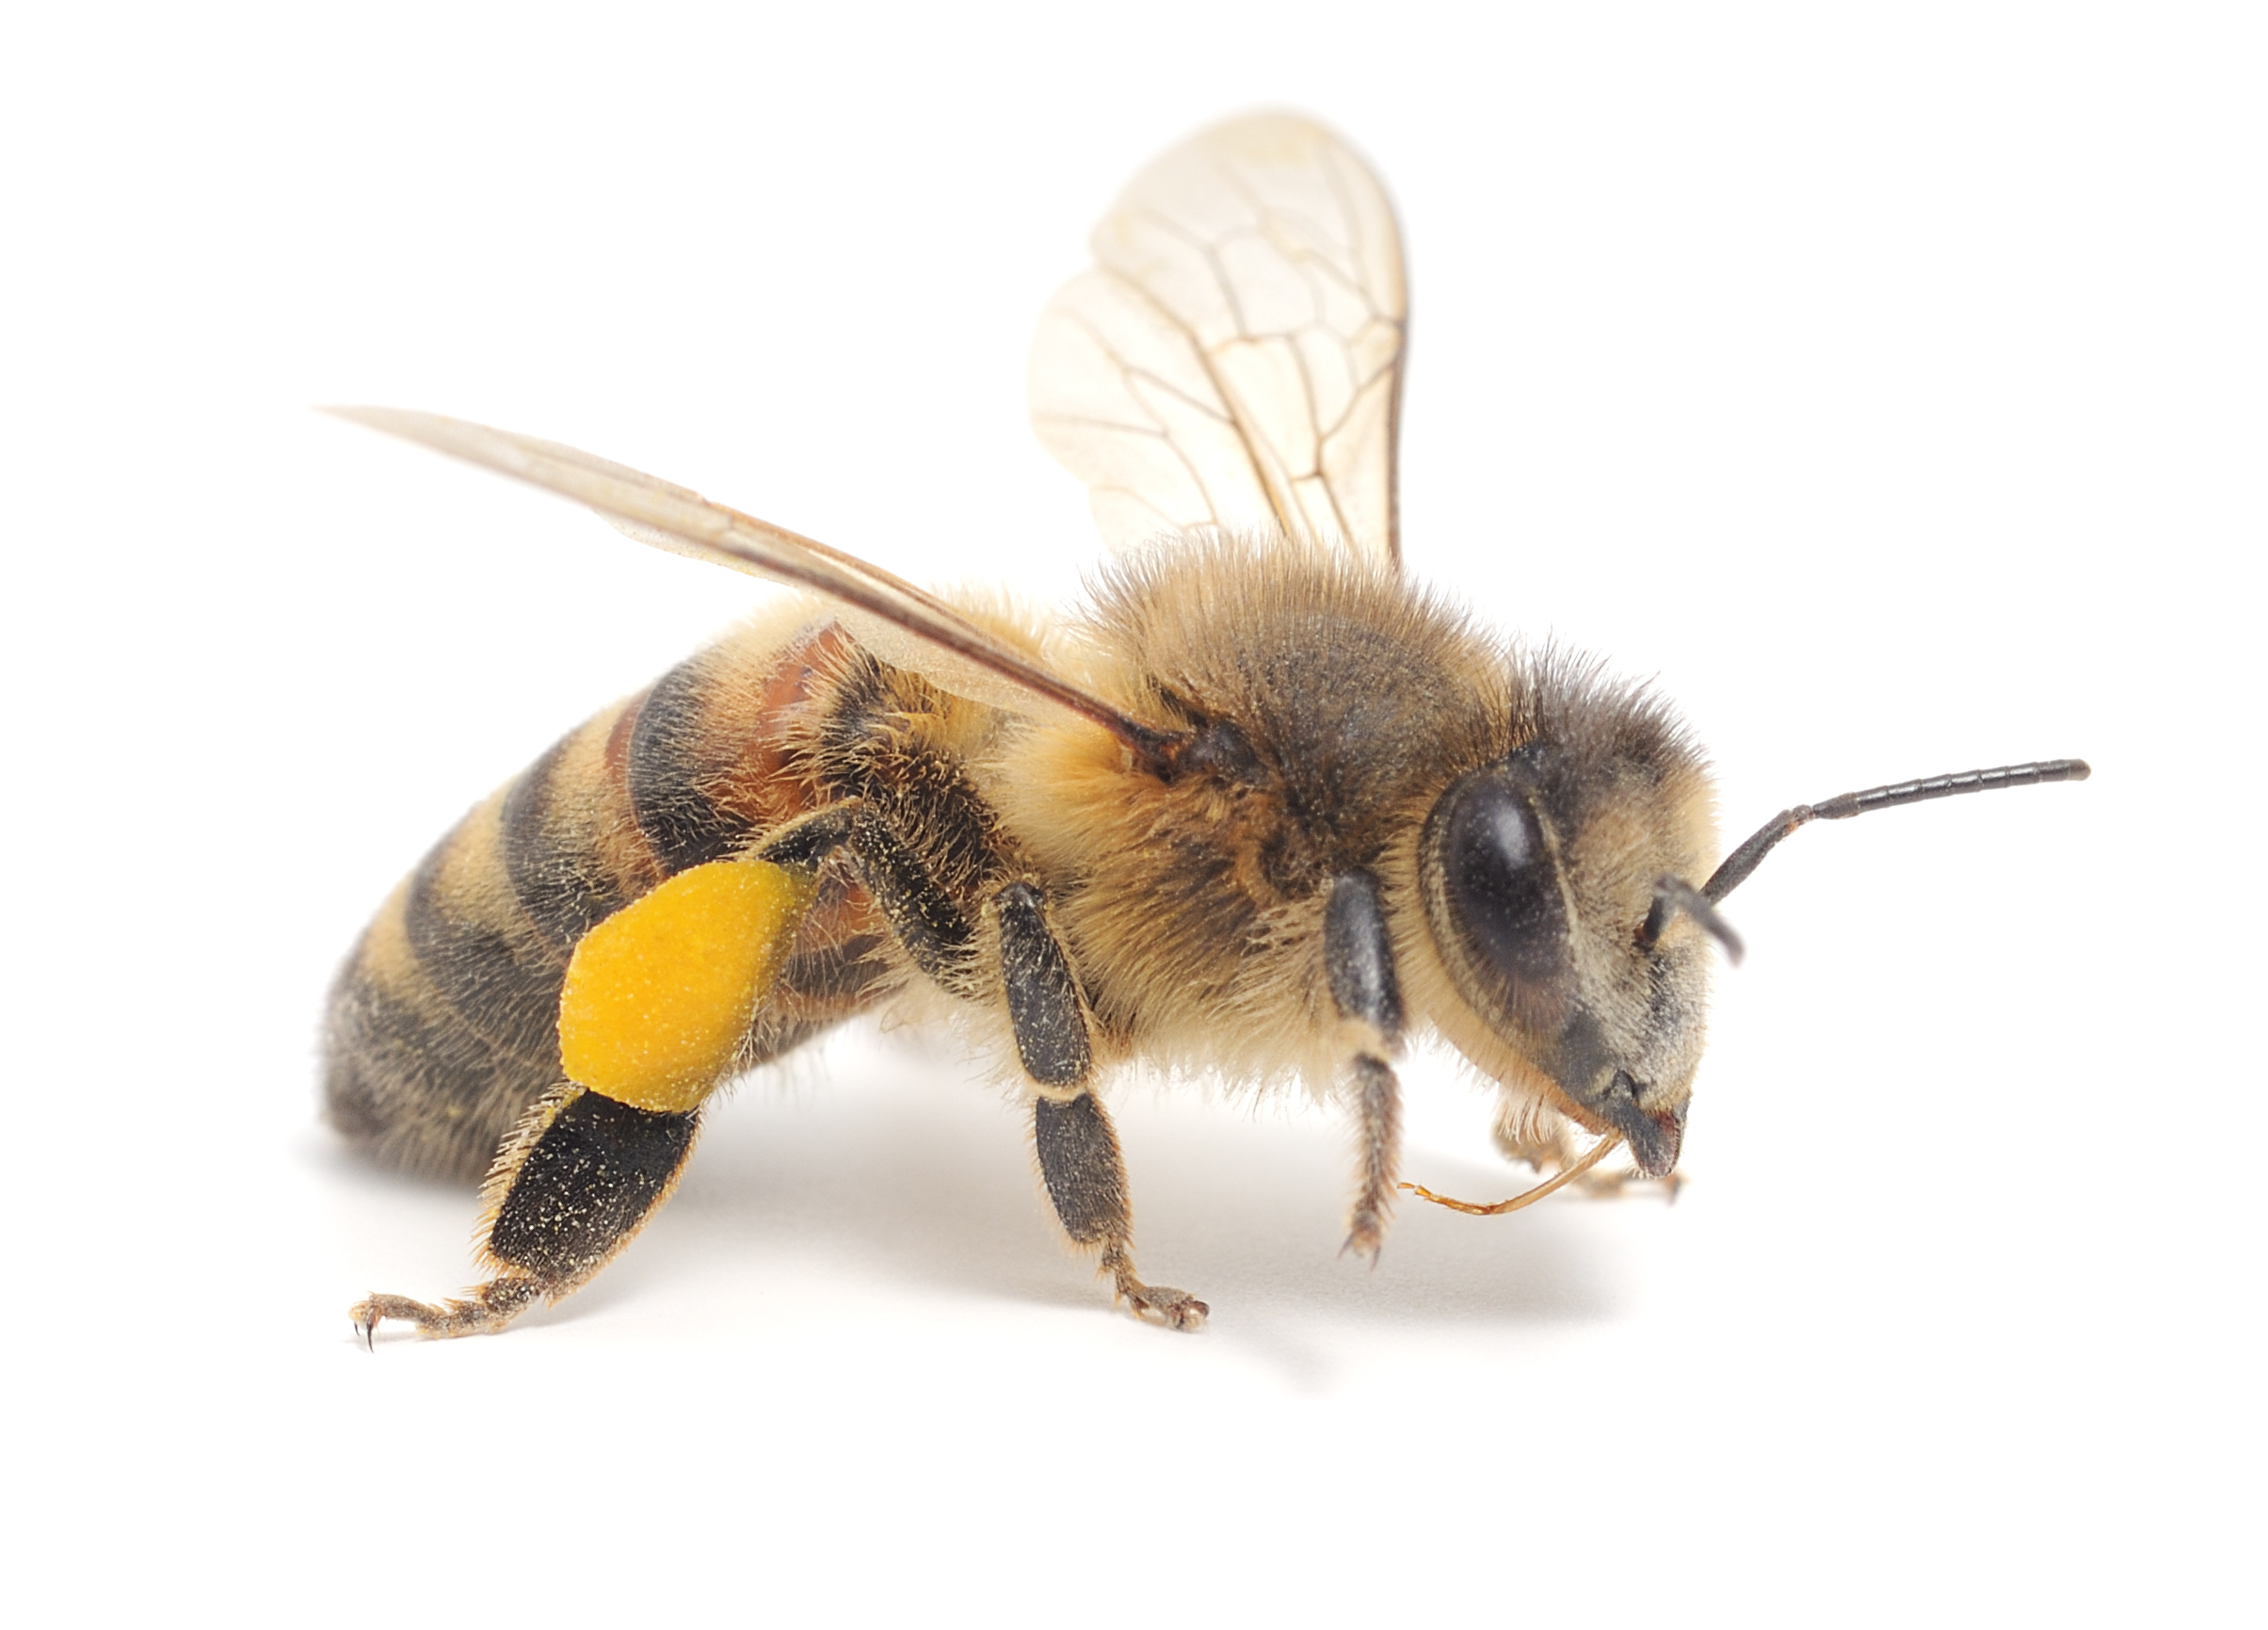 Buzz of the Beekeeper 